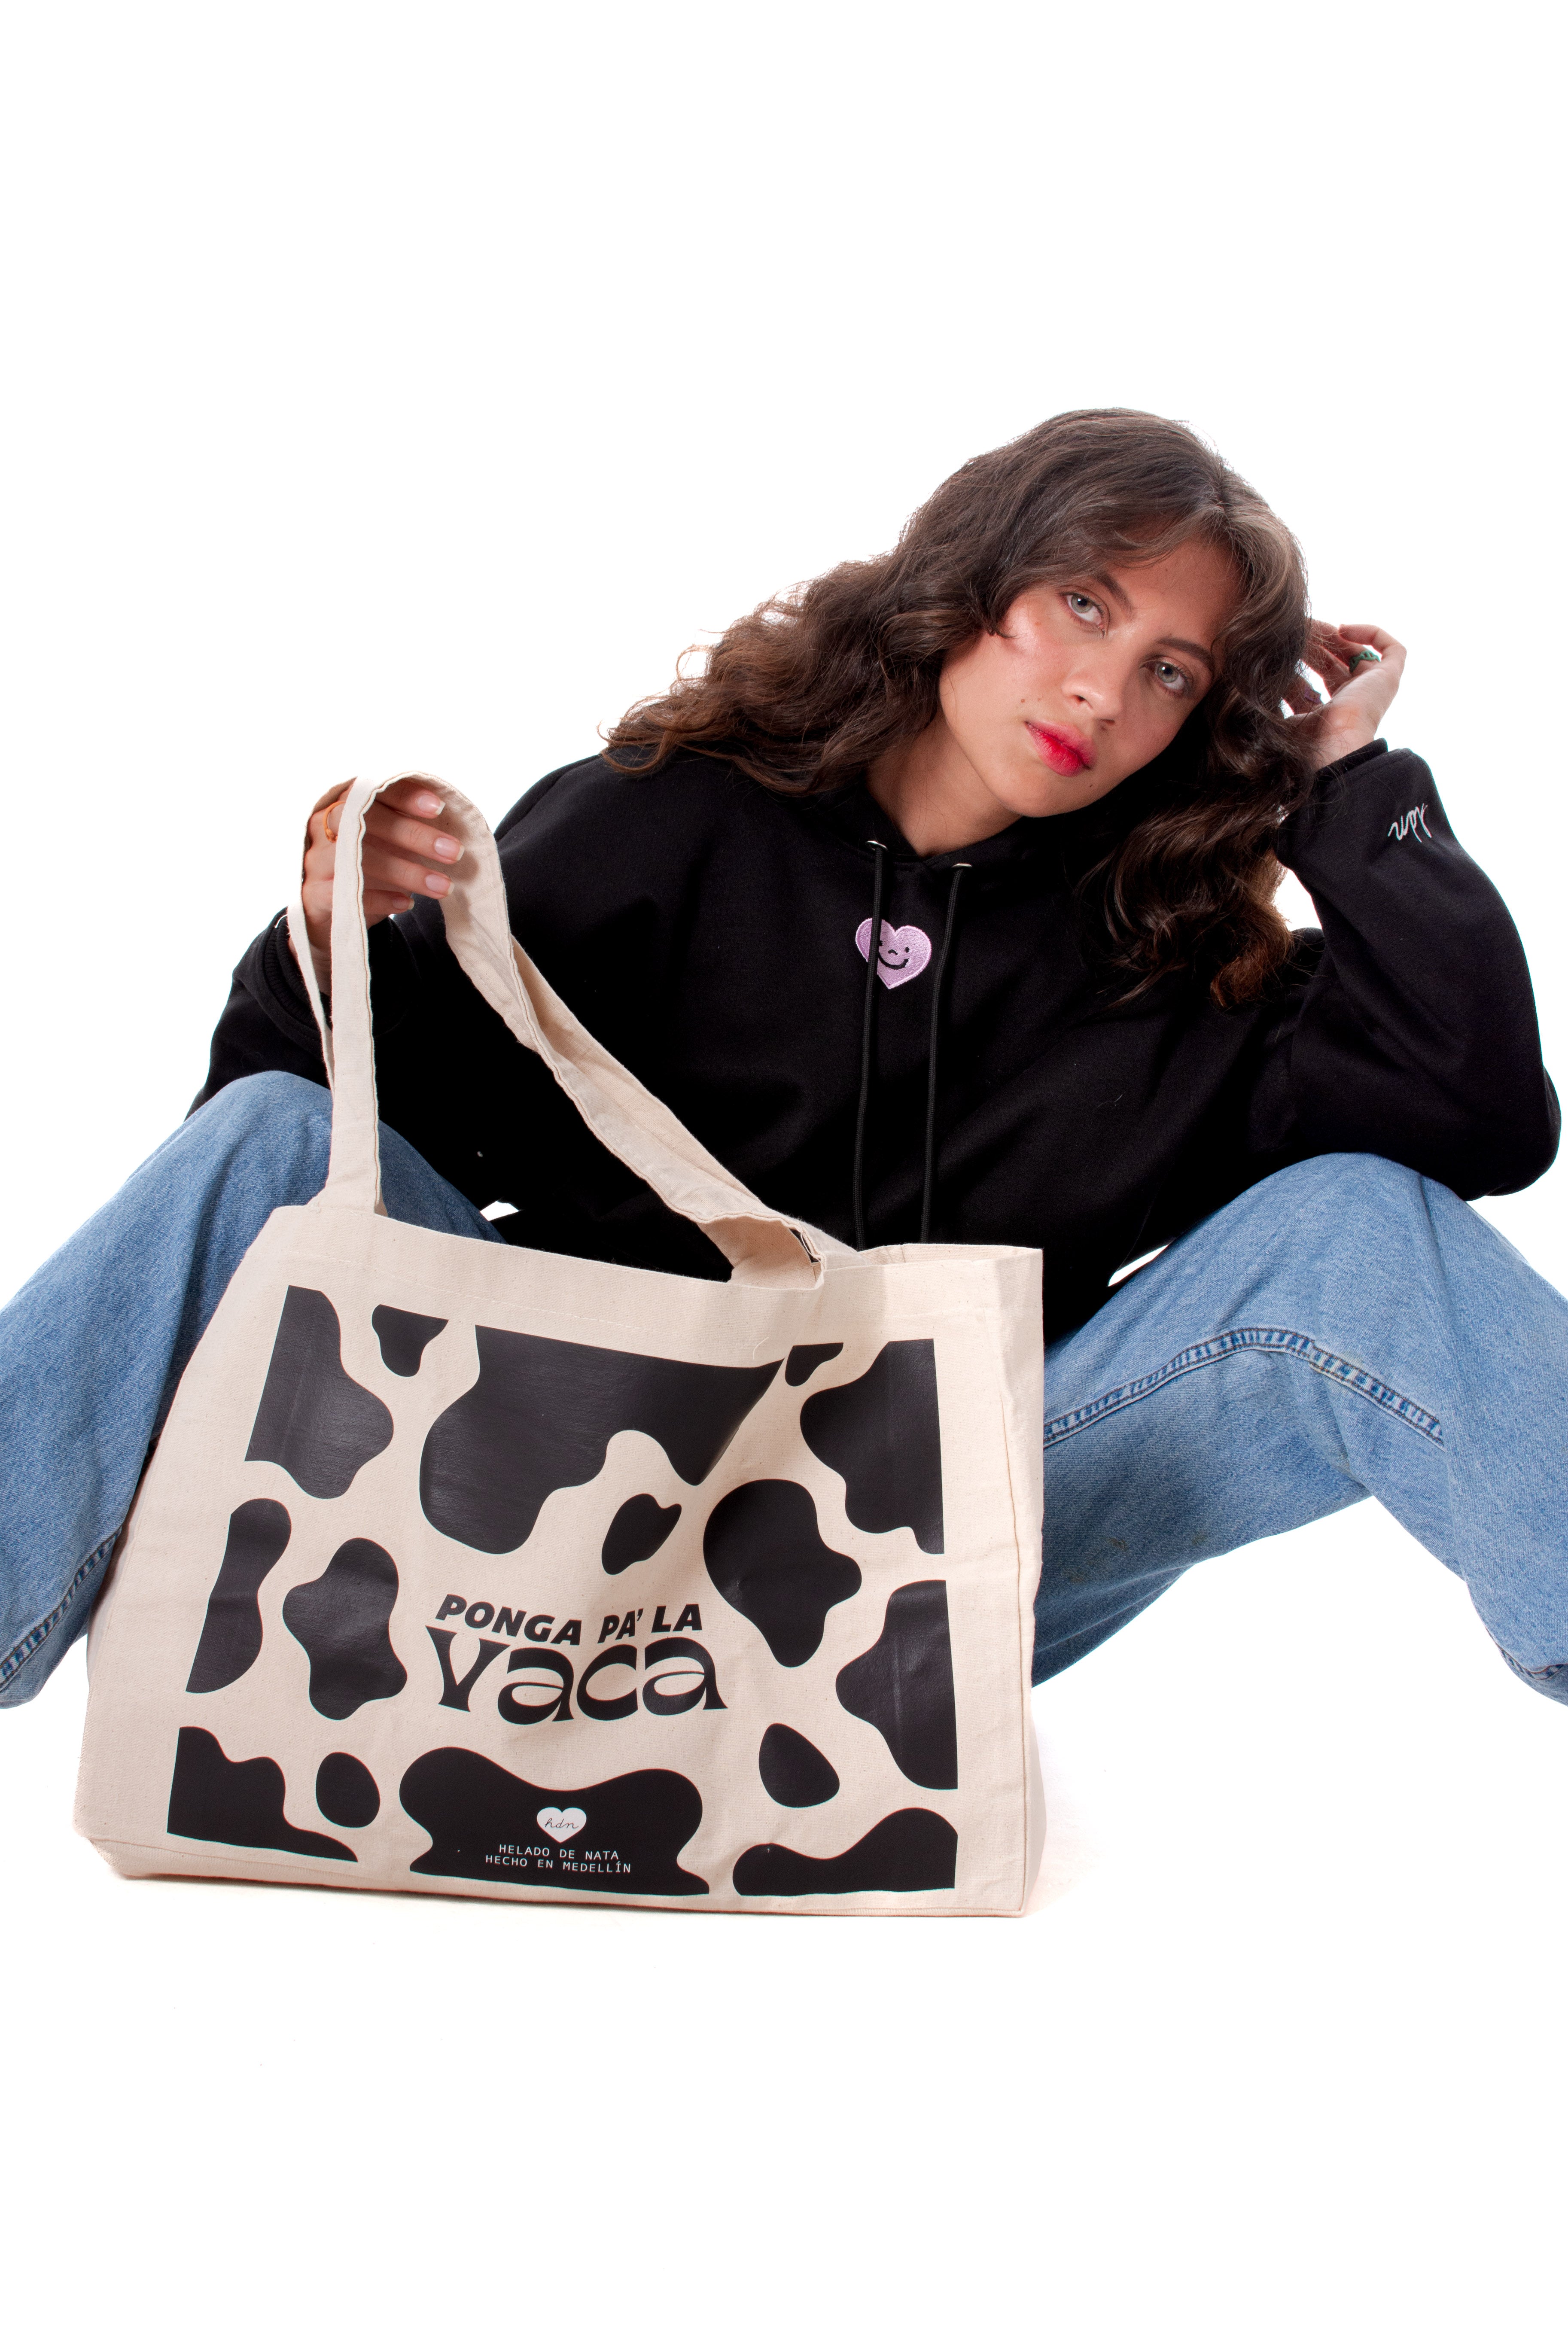 Bolsa de tela - Muuyy paisa decir "Ponga pa' la Vaca"